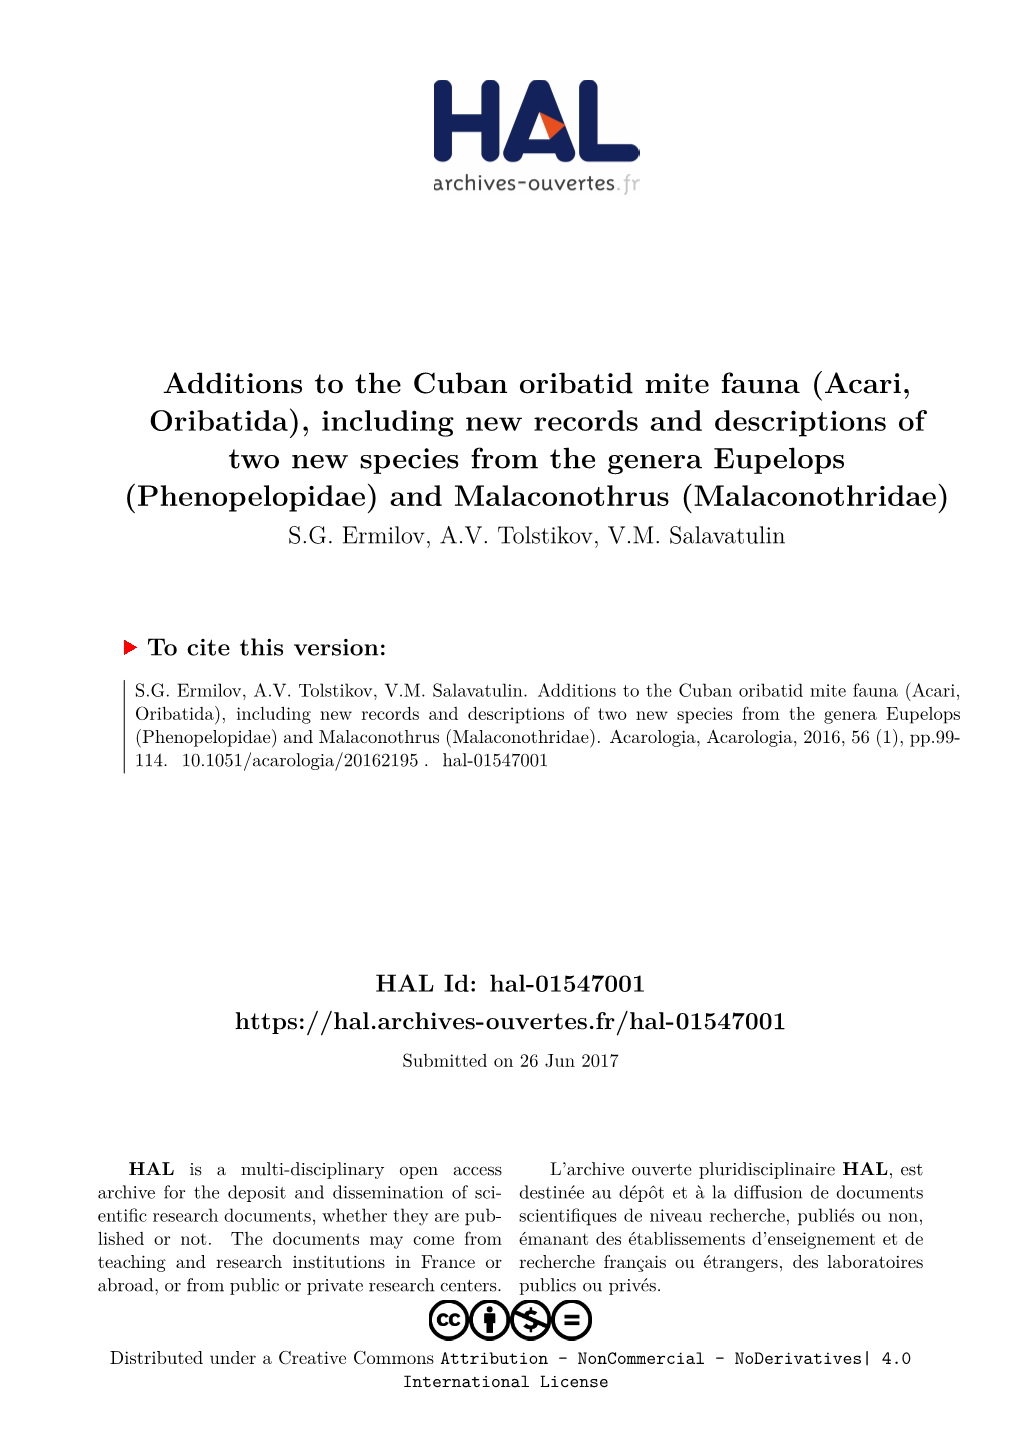 Additions to the Cuban Oribatid Mite Fauna (Acari